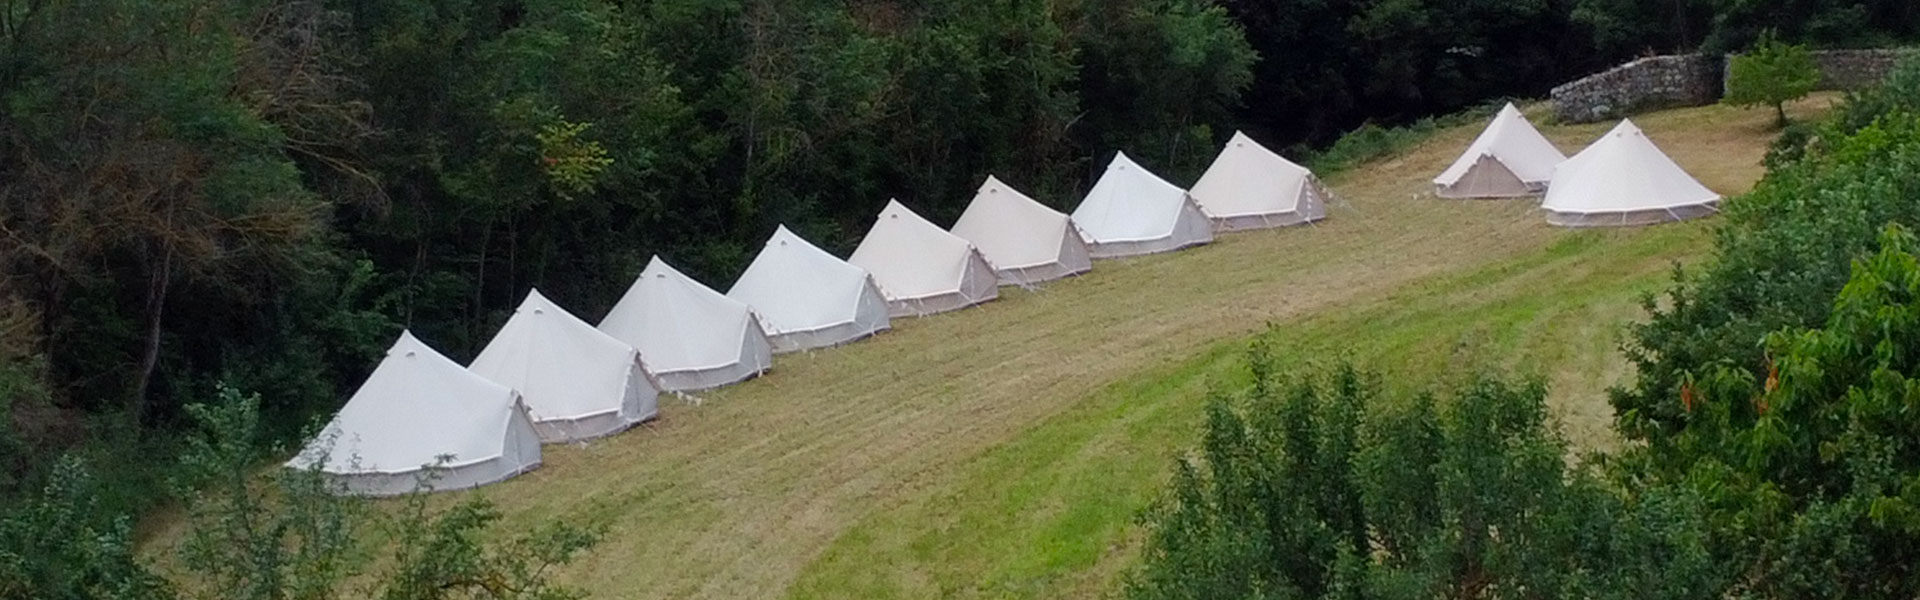 tentes nomades